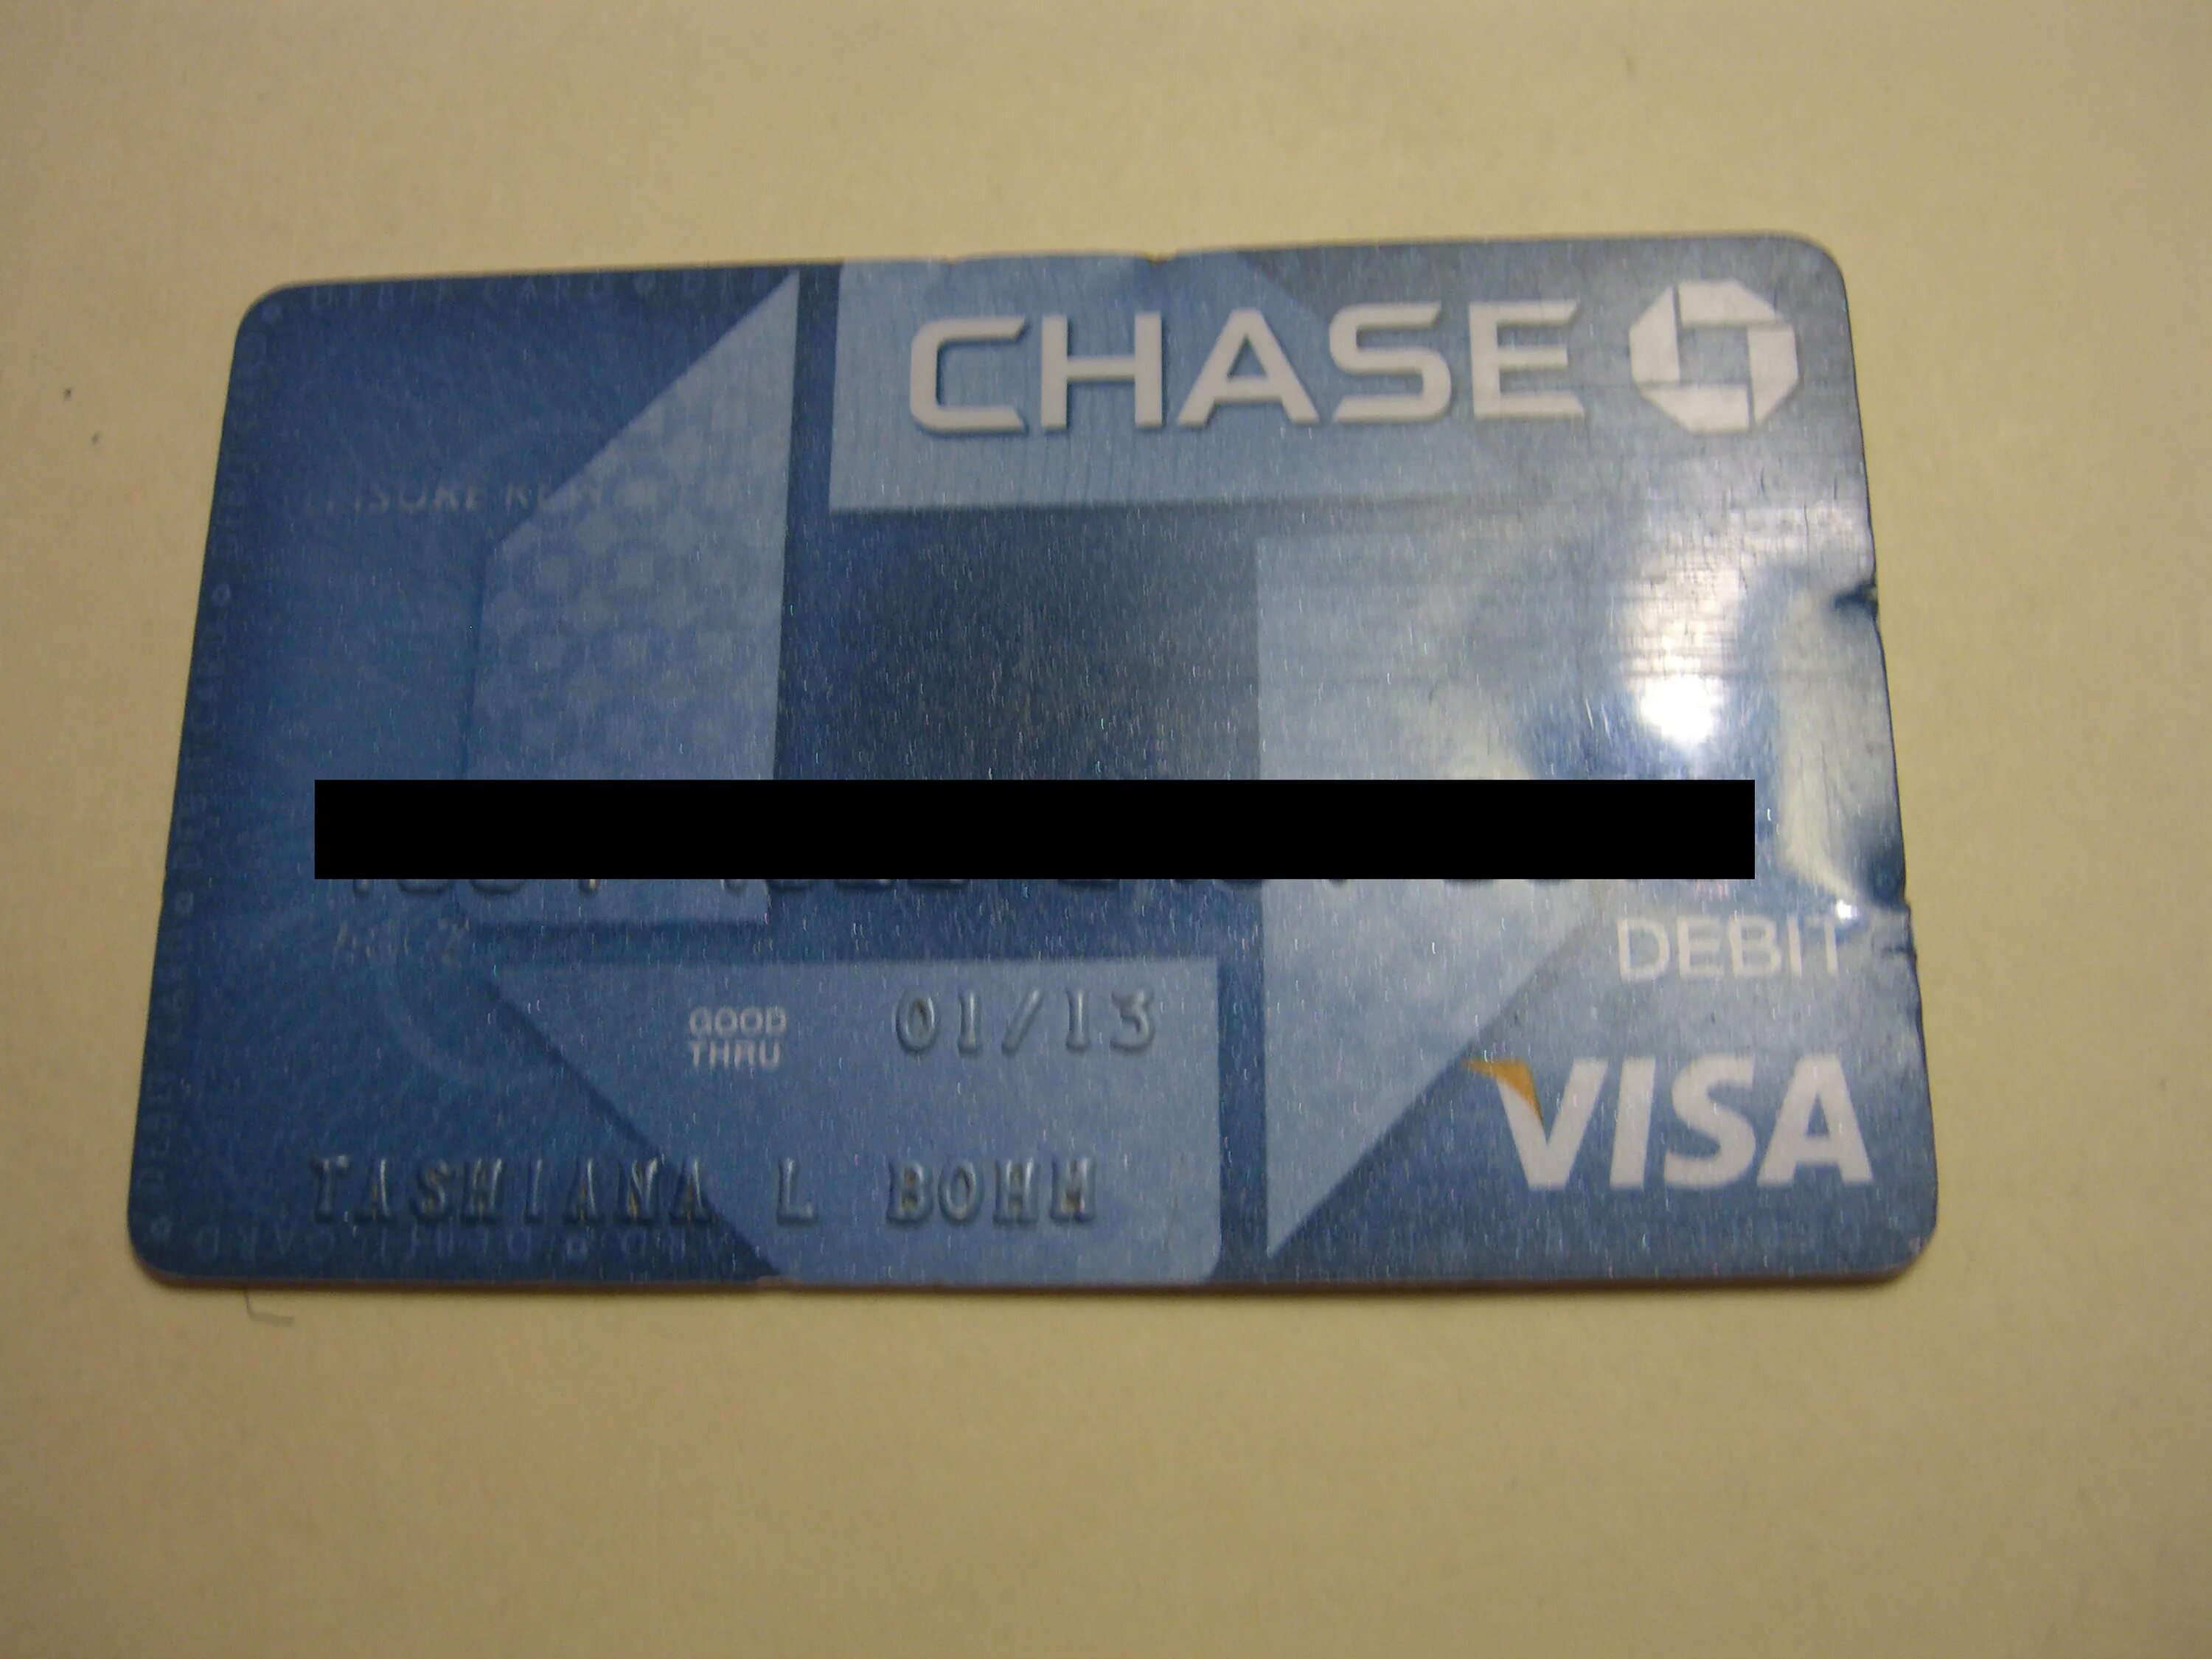 Lose bank. Chase Bank карта. Chase visa Card. Chase Debit Card. Chase Bank visa.